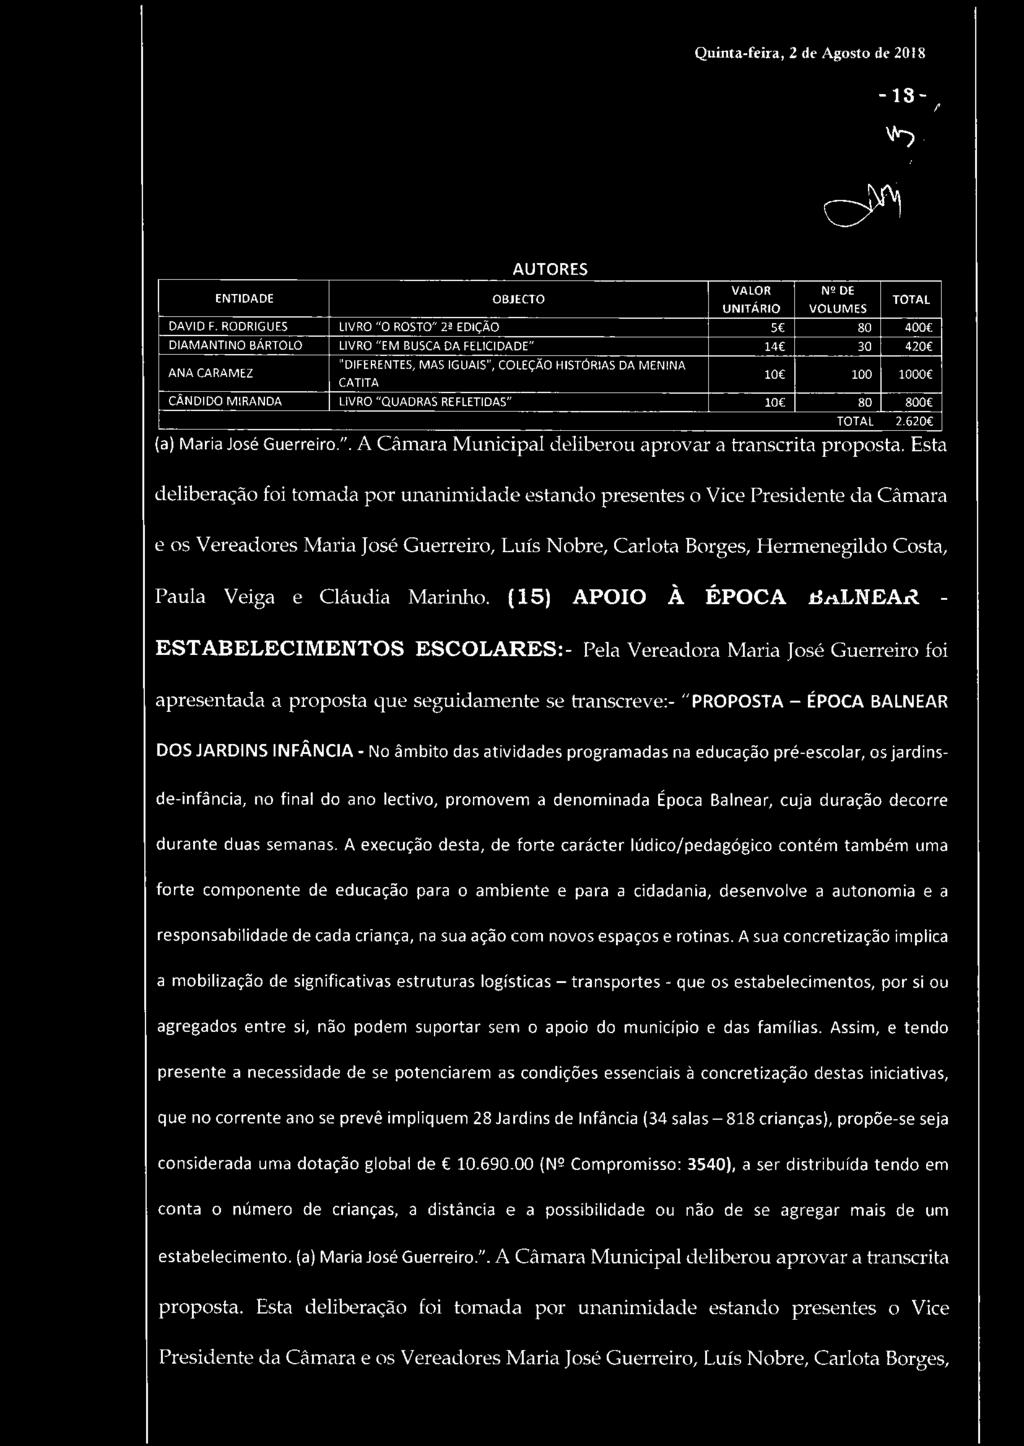 TOTAL TOTAL 400 420 1000 800 2.620 (a) Maria José Guerreiro.". A Câmara Municipal deliberou aprovar a transcrita proposta.